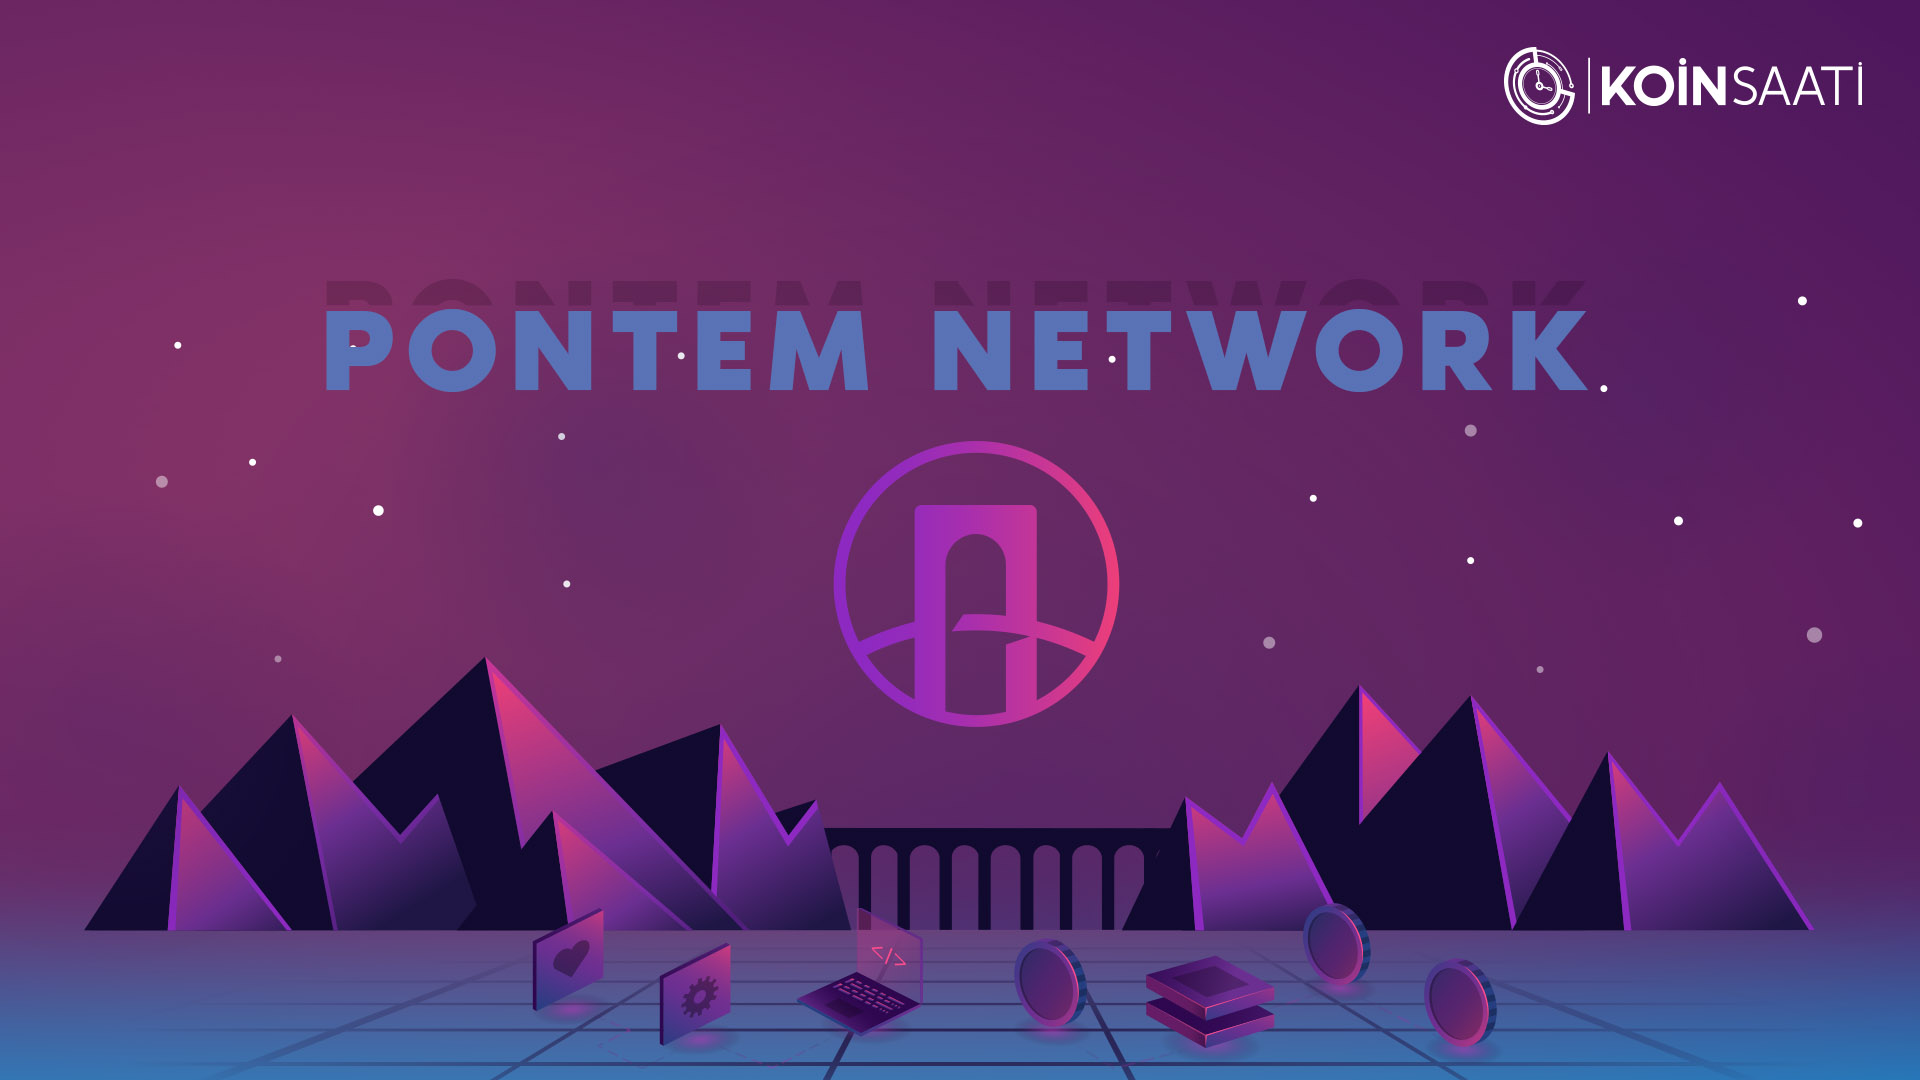 Pontem Network